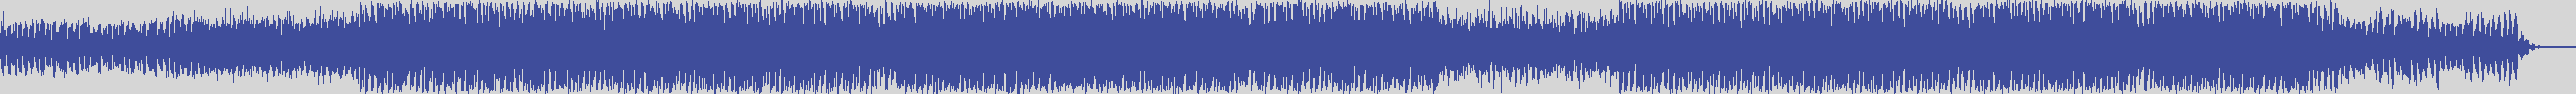 vitti_records [VIT020] Deep L - Sea Weed [Original Mix] audio wave form